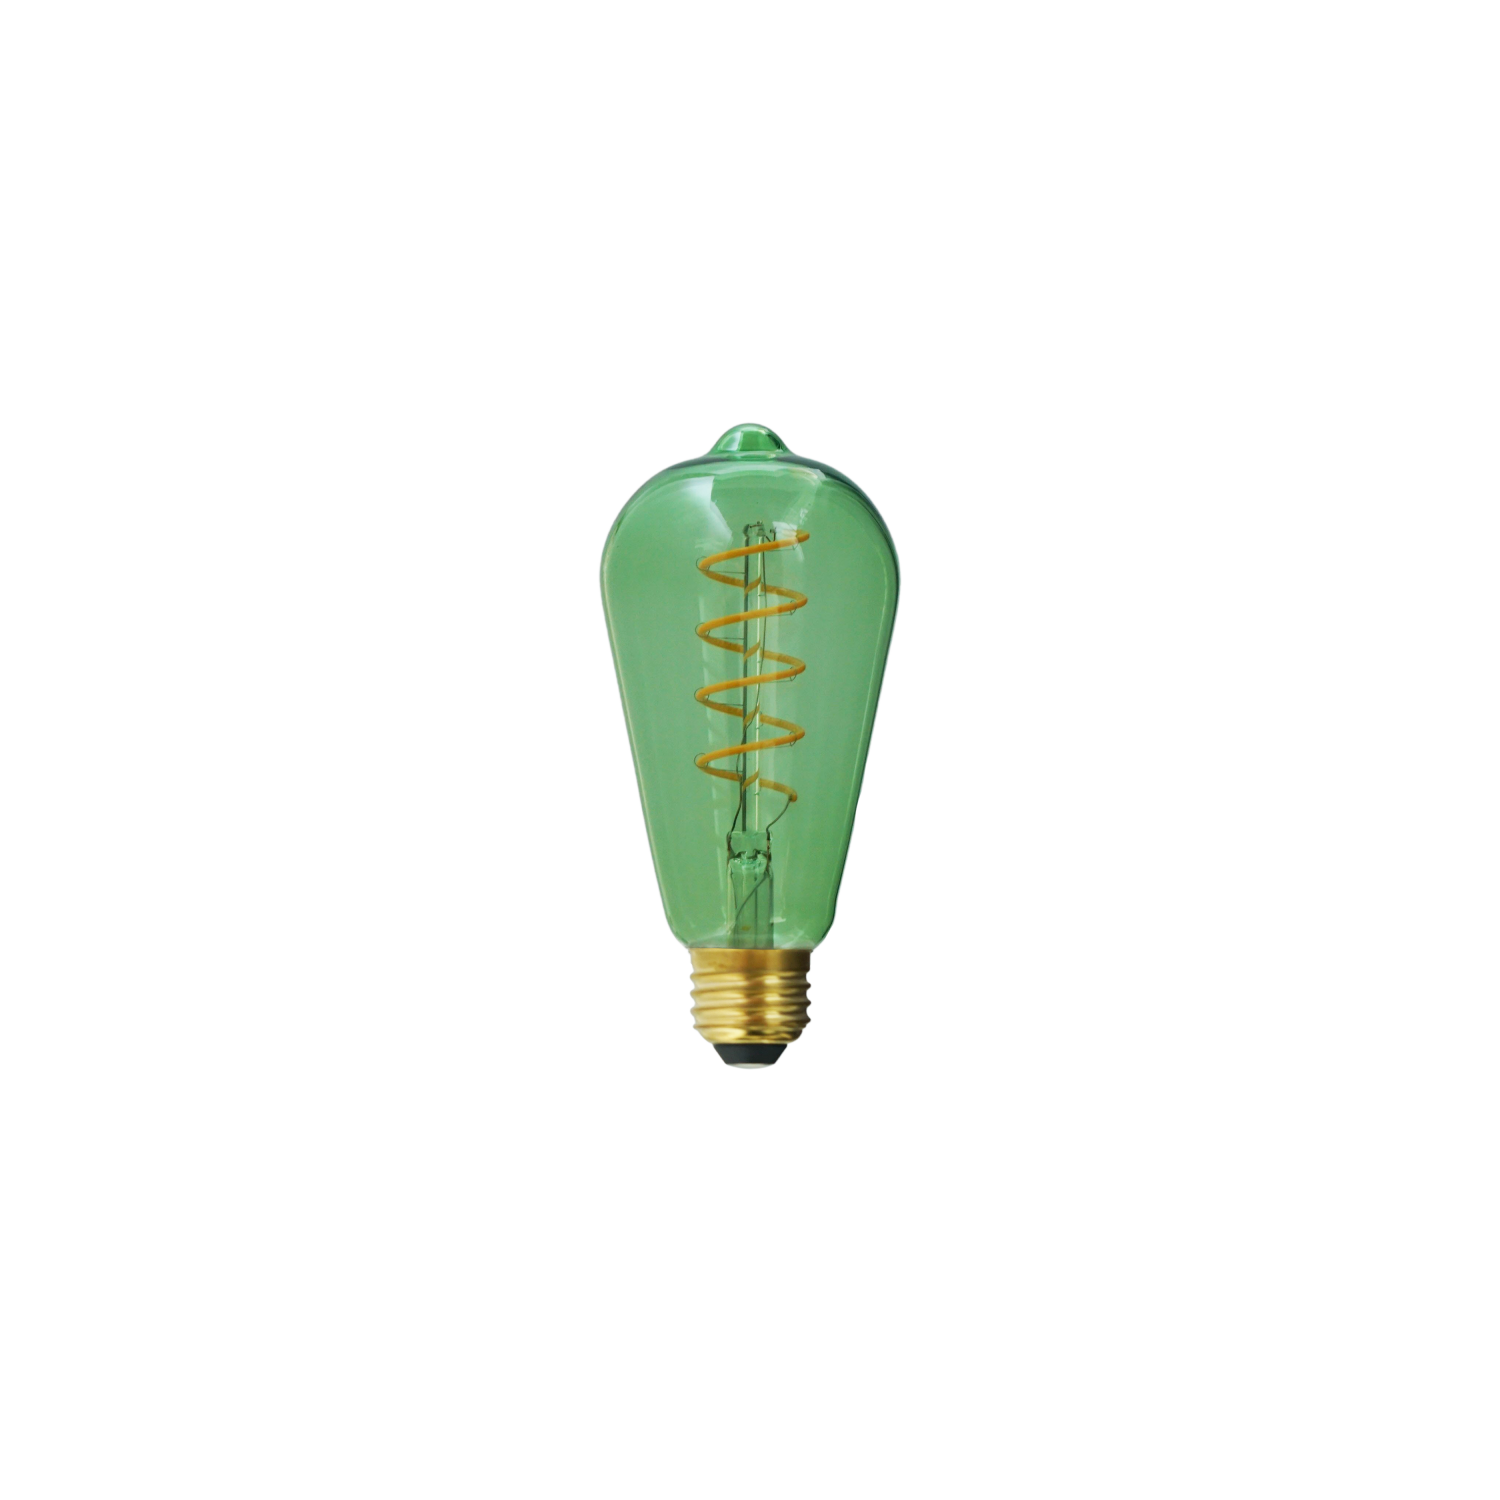 Bombillo LED de cristal verde y filamento en espiral - LCO Green21